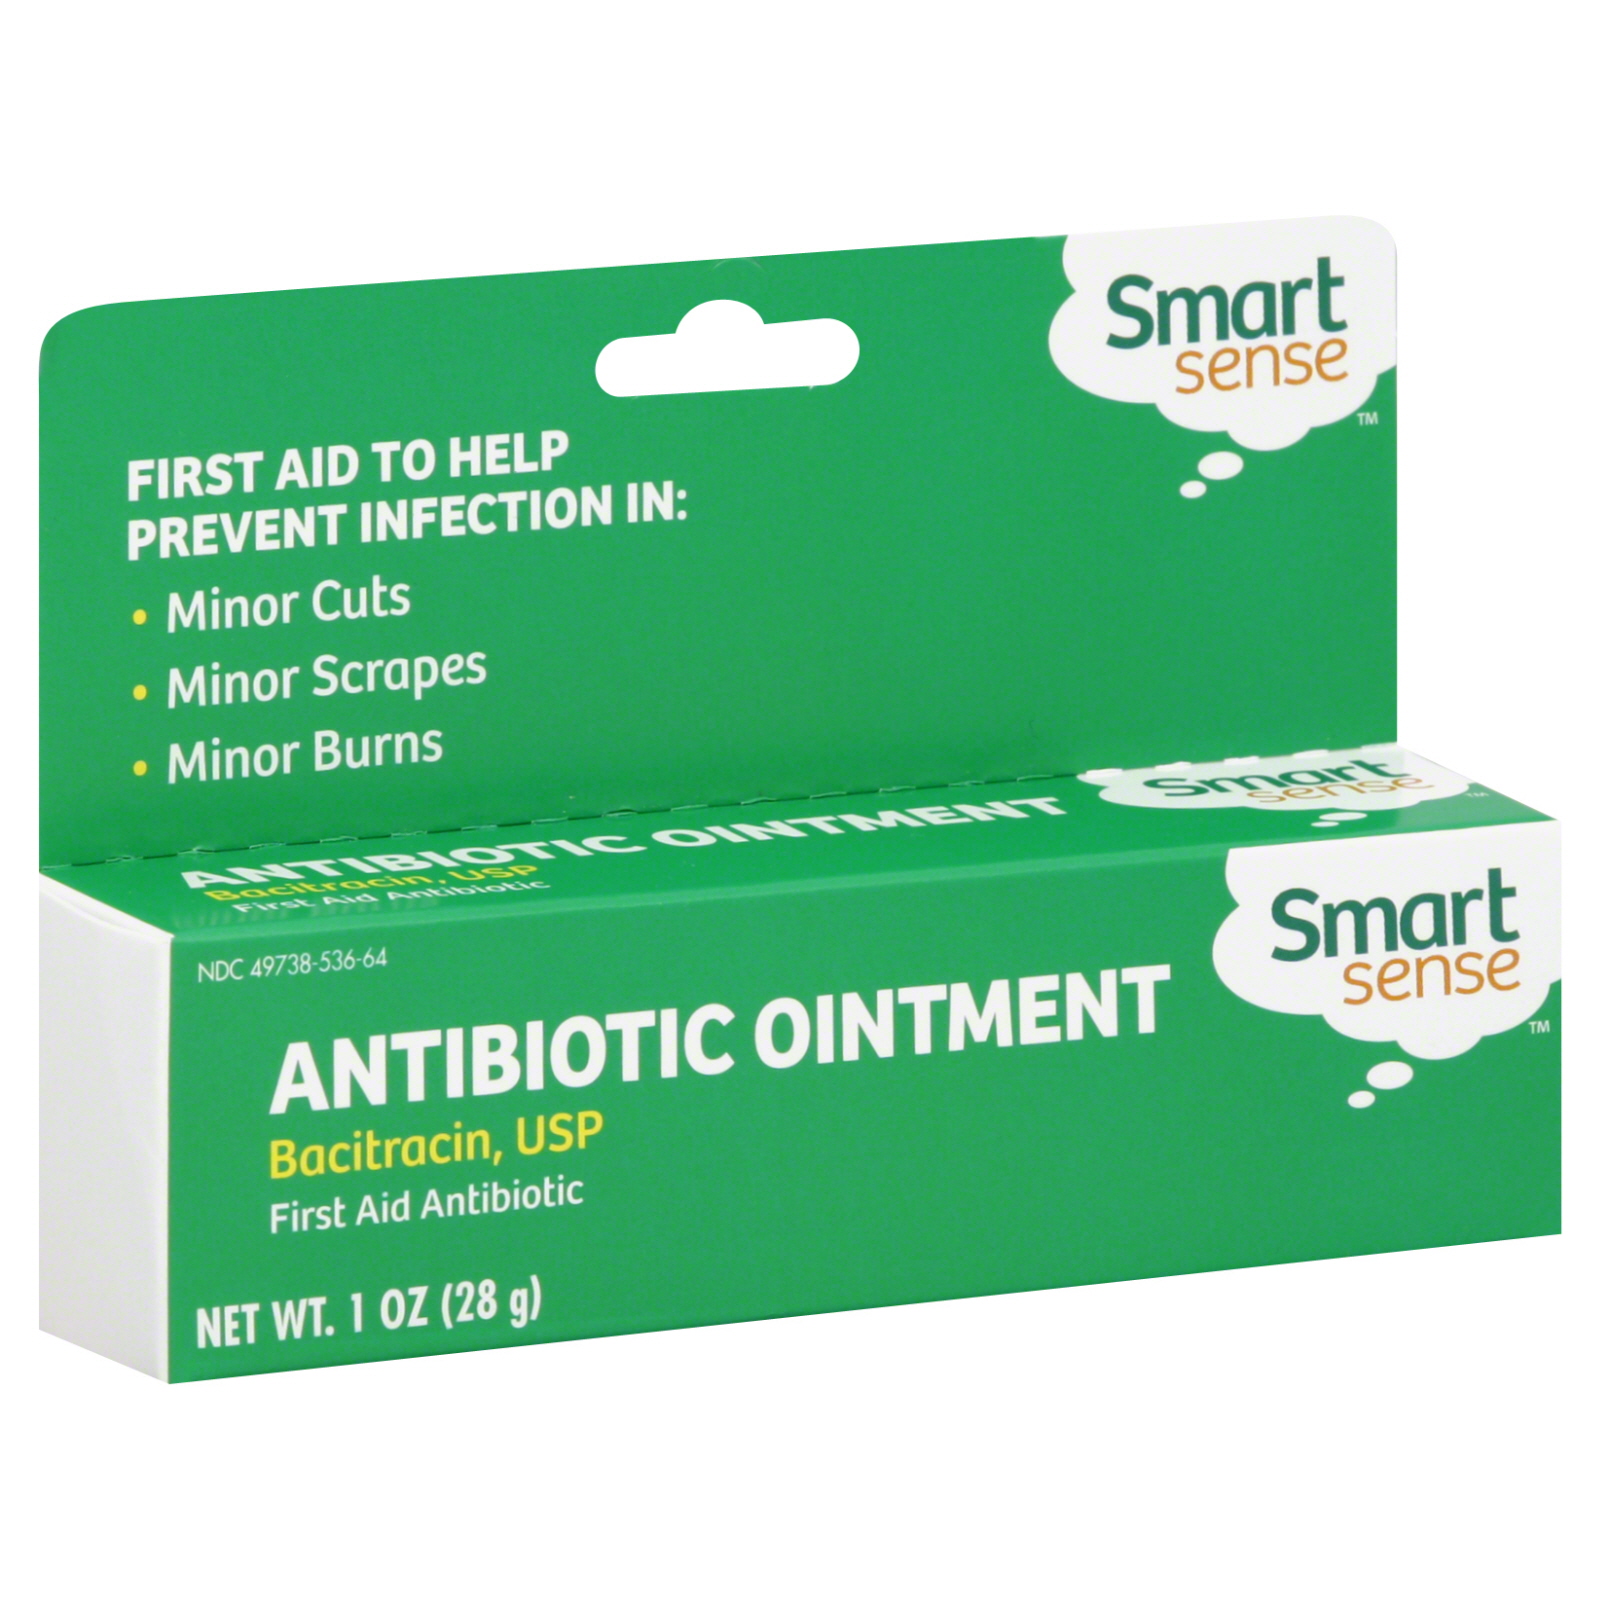 Smart Sense Antibiotic Ointment, Bacitracin, USP, 1 oz